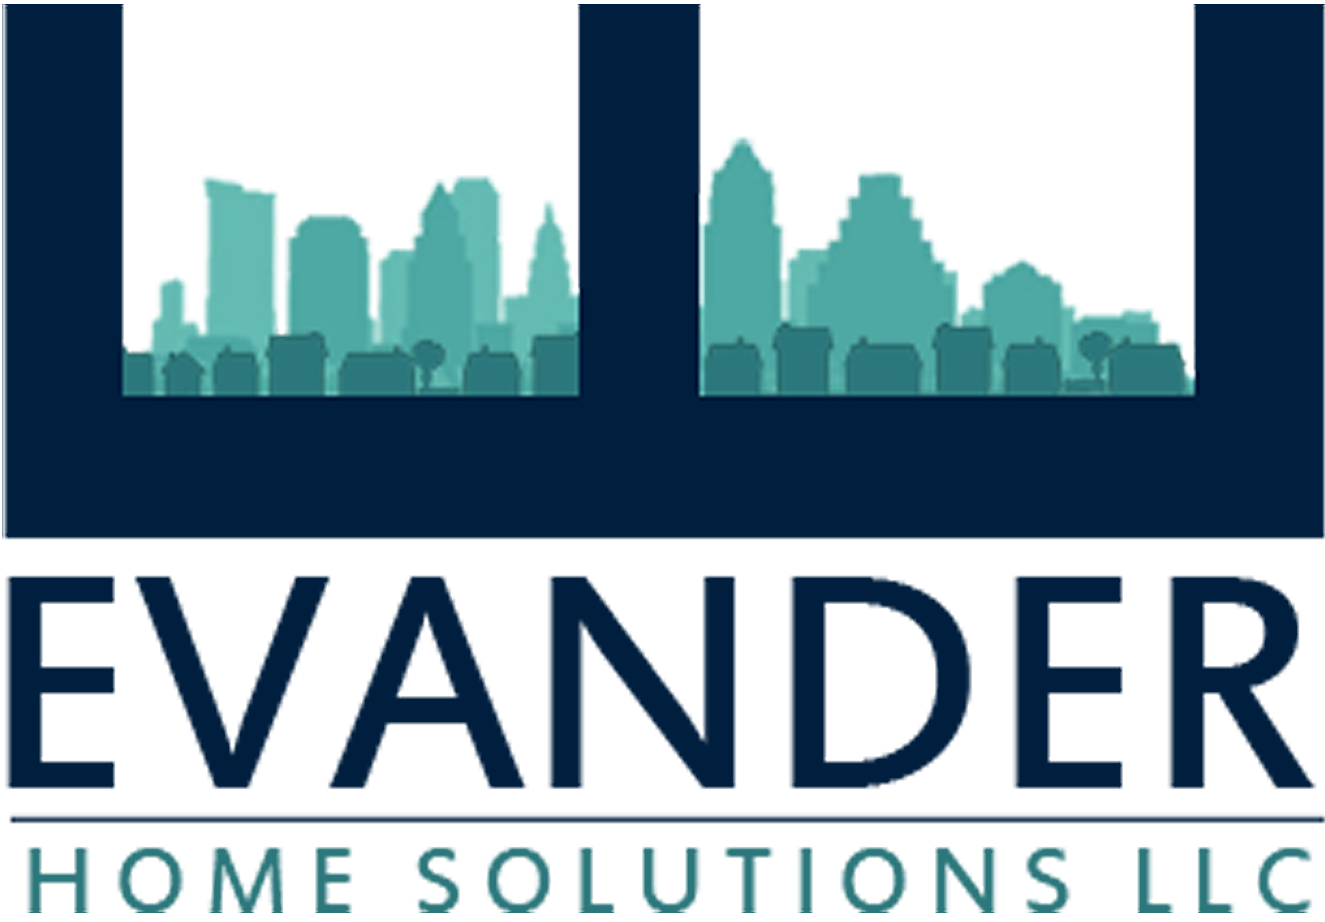 Evander Home Solutions